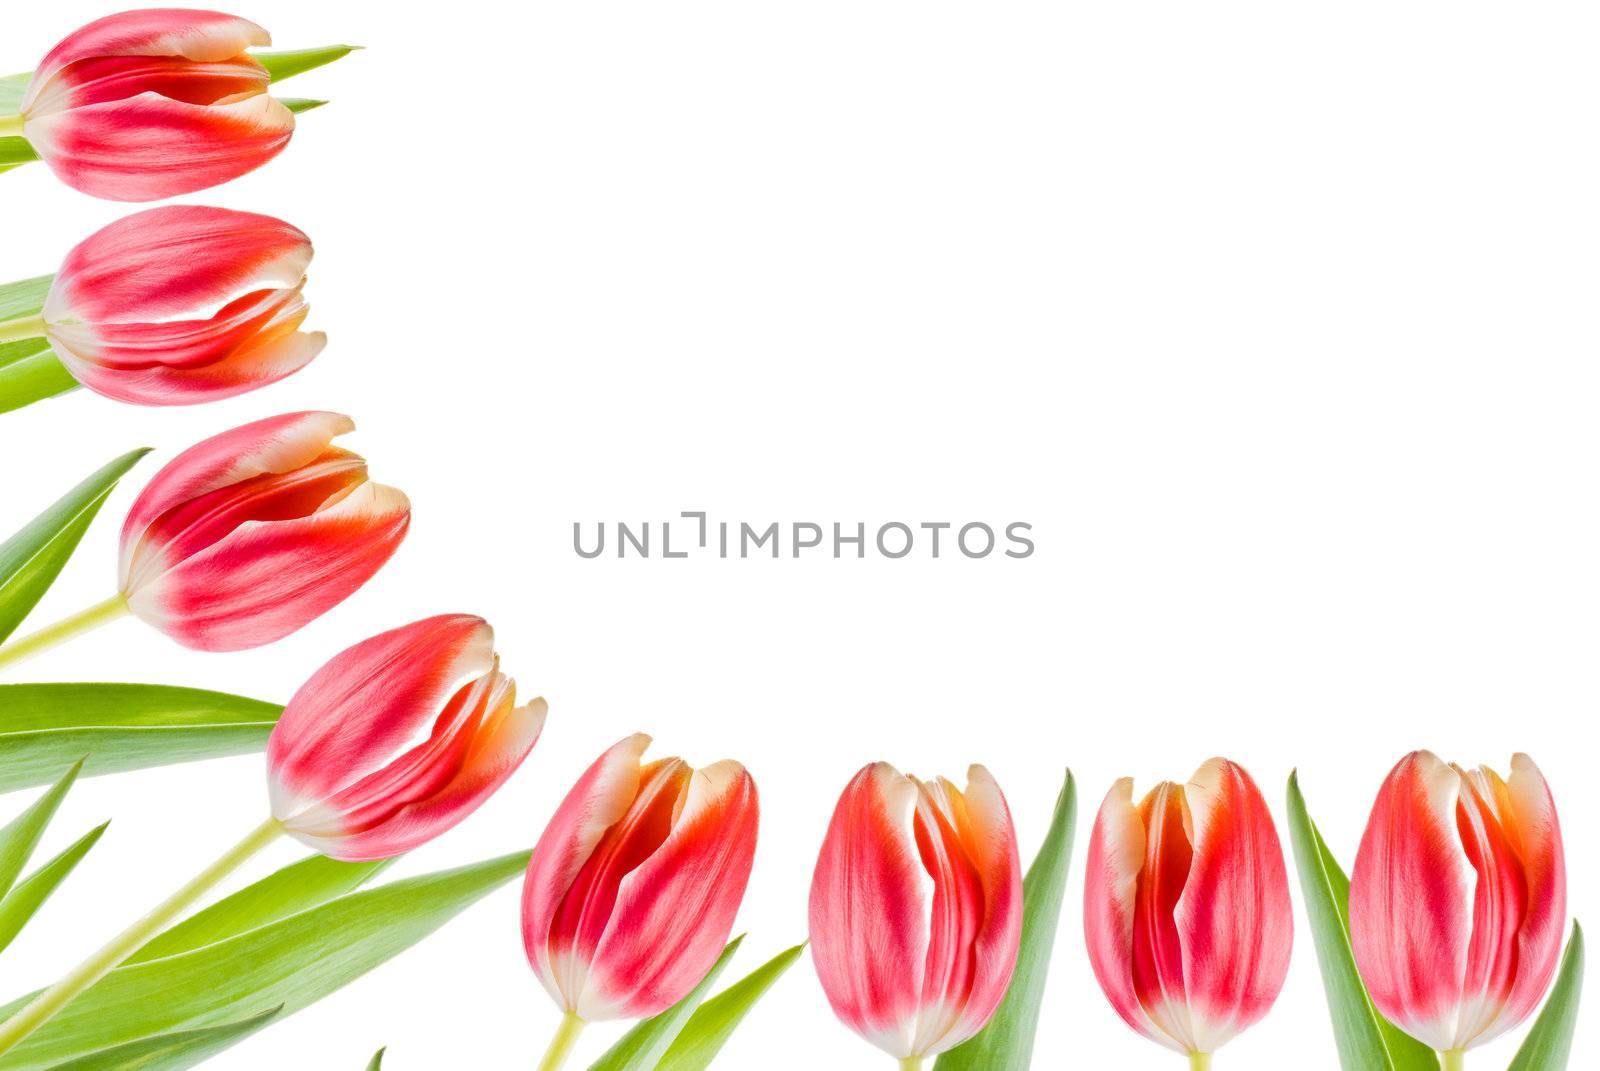 Tulips border by caldix